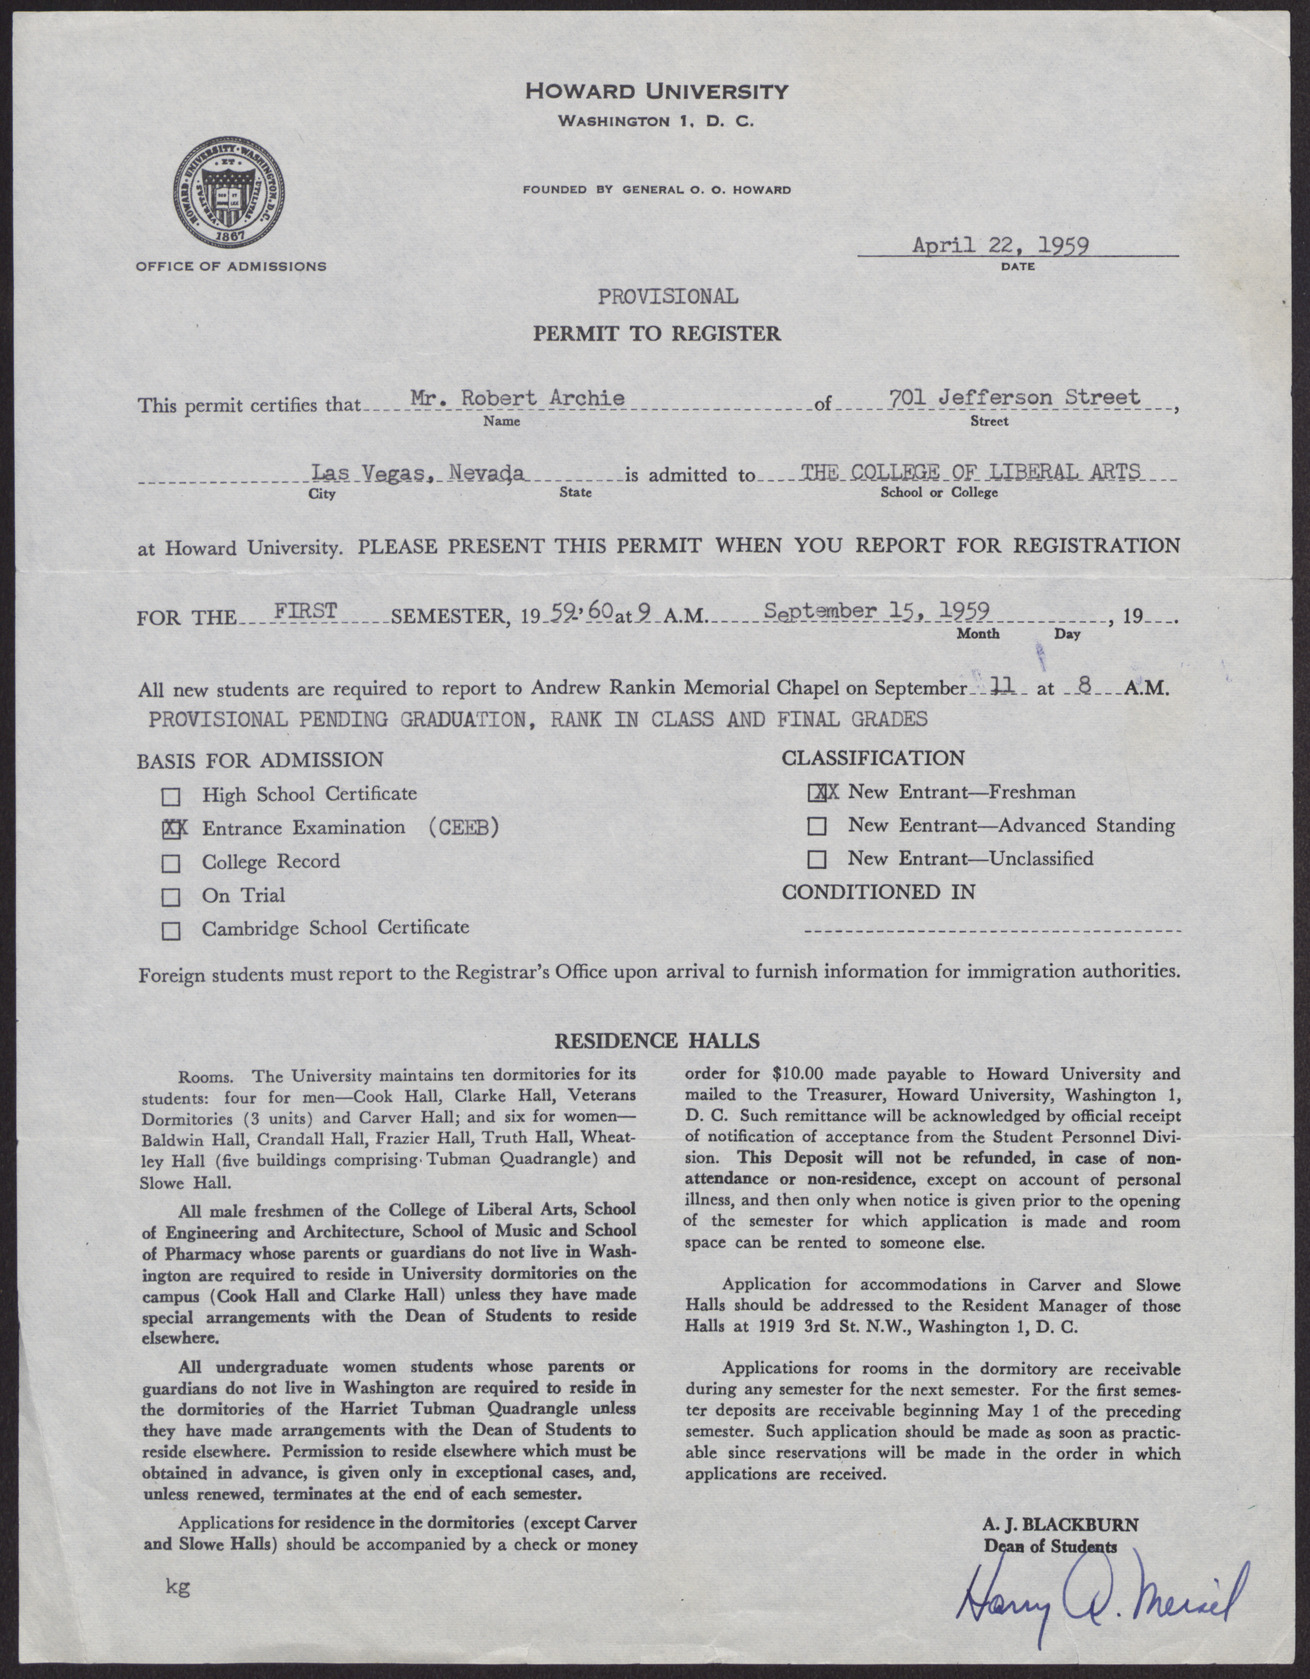 Howard University registration permit for Mr. Robert Archie, April 22, 1959